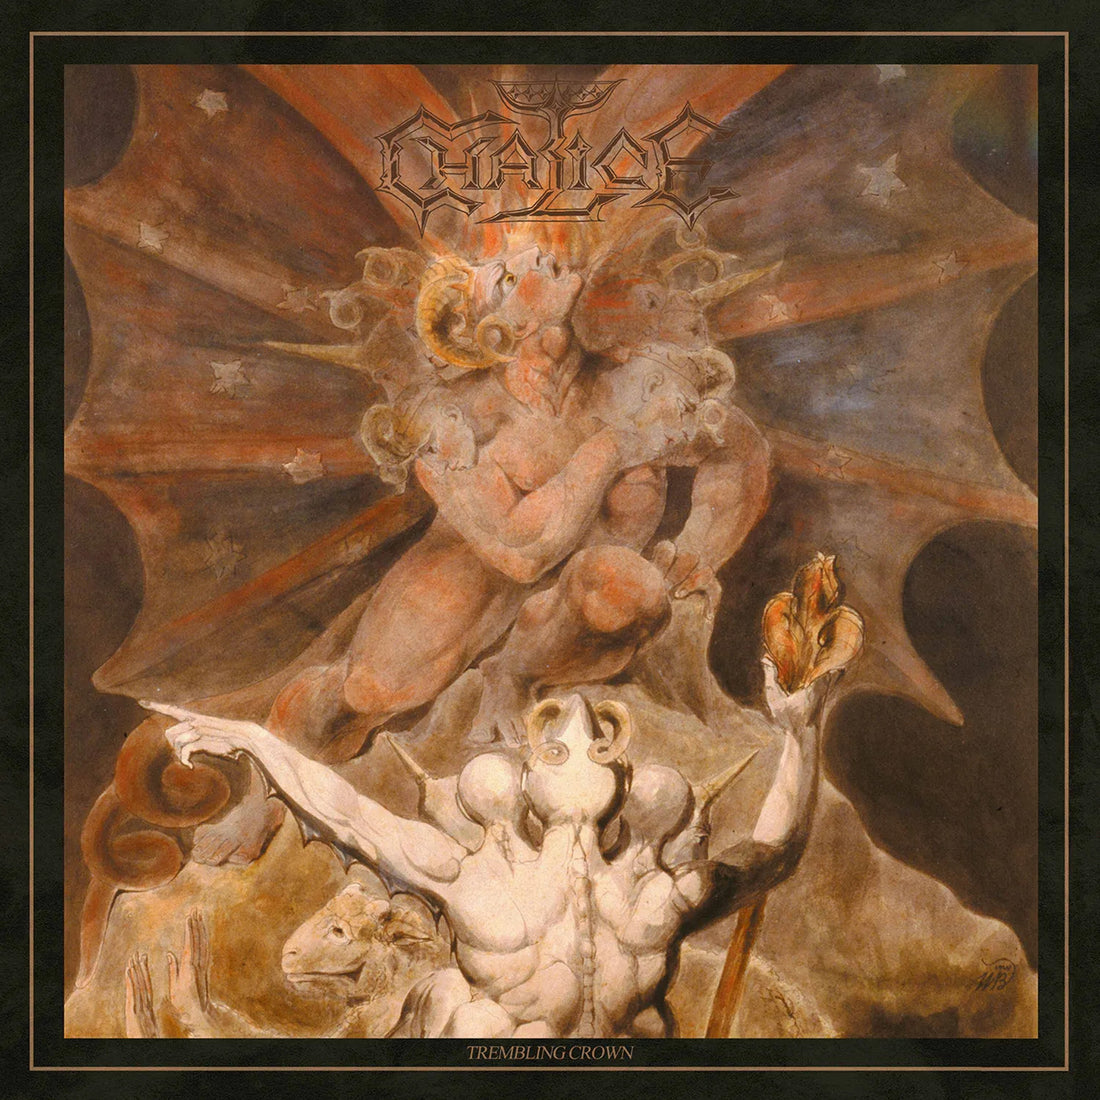 Chalice - 'Trembling Crown' LP